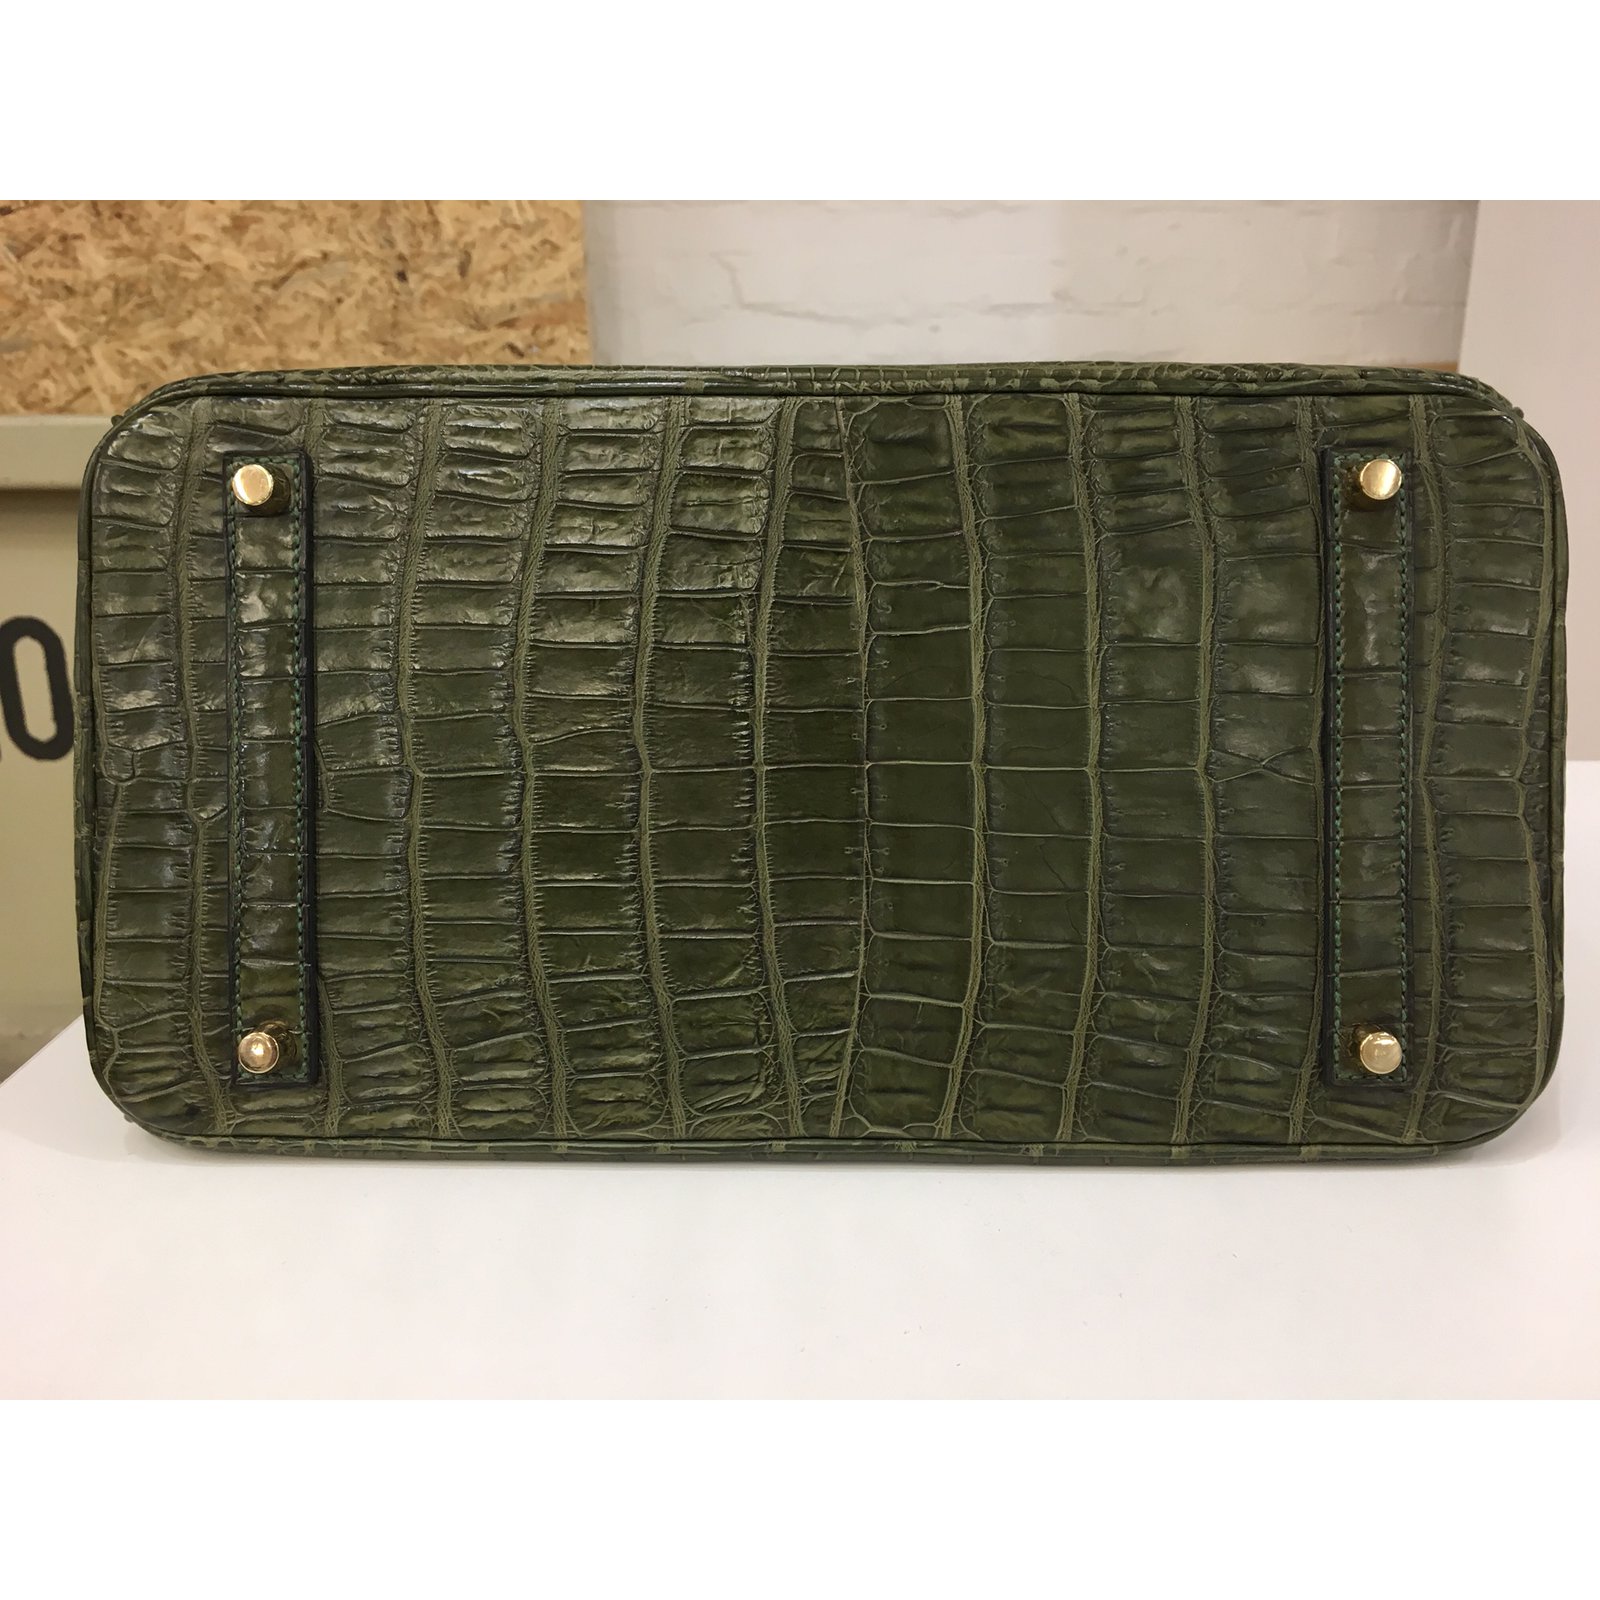 Hermès Birkin Bag 35 Croco Leather in Vert Veronese Green Exotic